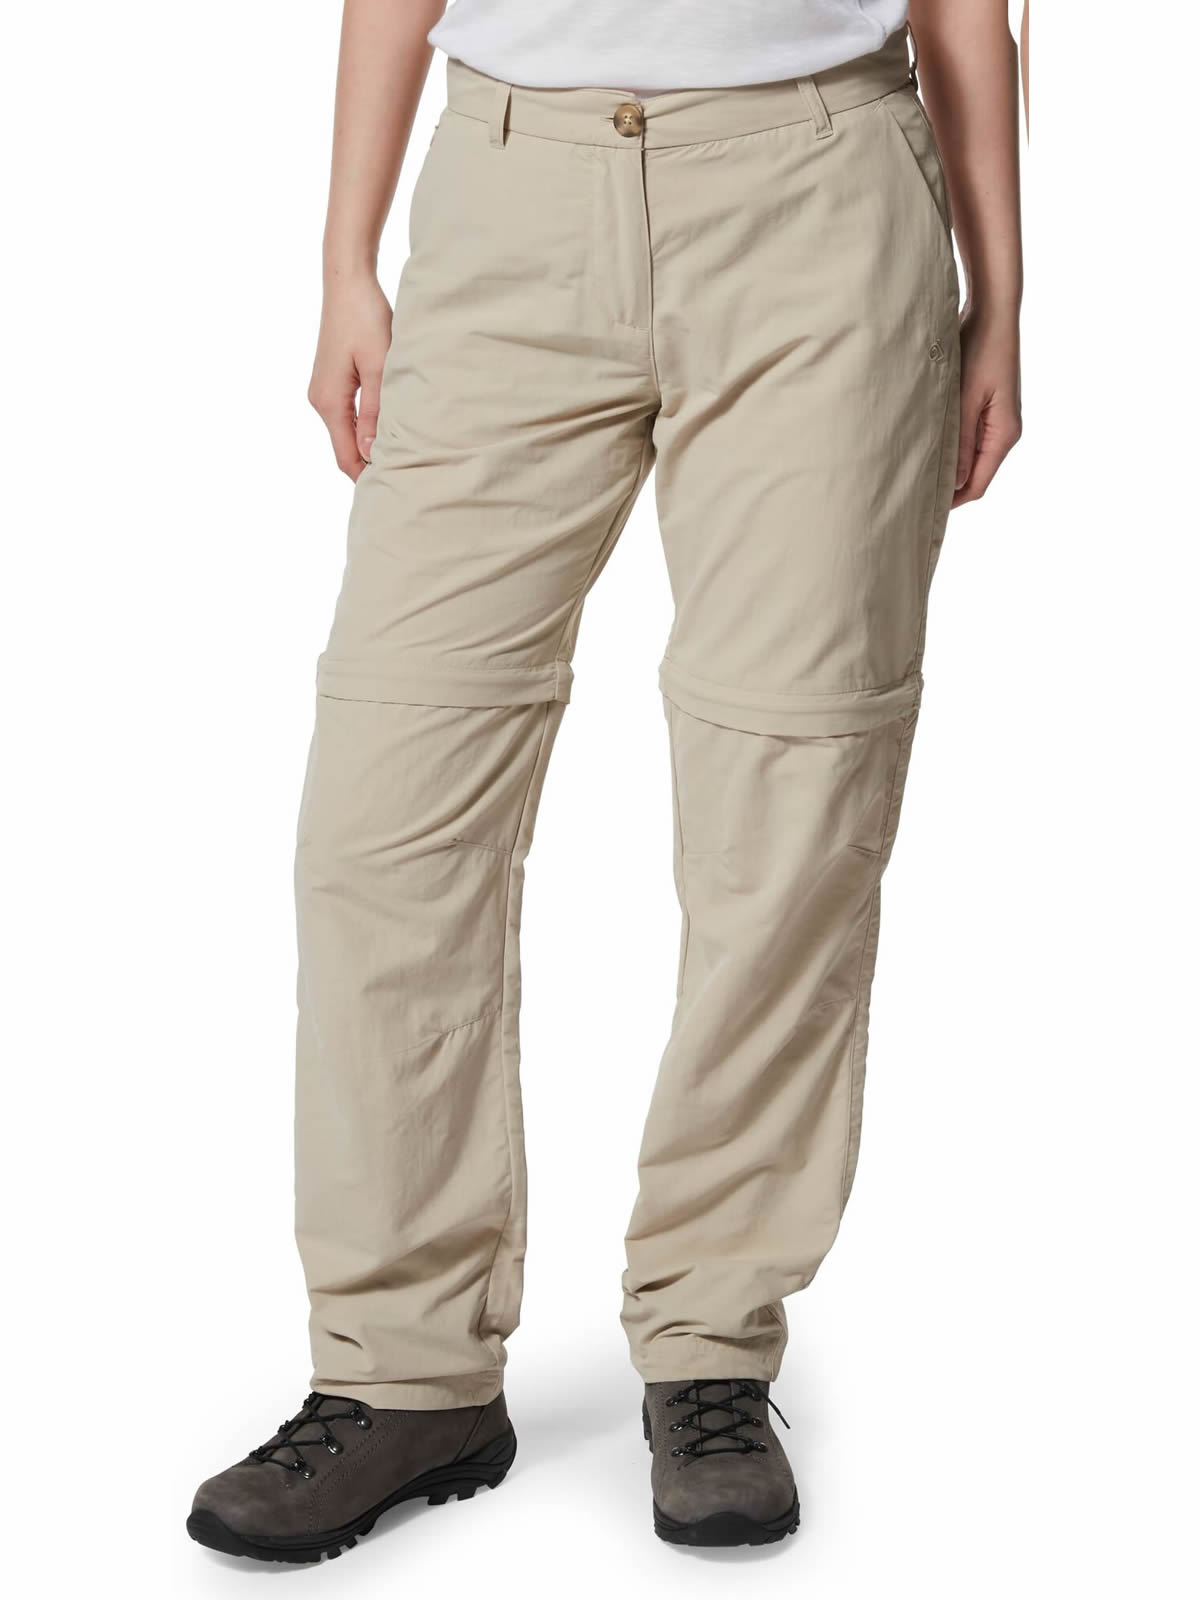 HAGLOFS 2in1 Zip Off Trousers Shorts Ladies Medium Hiking Women Trekking  Walking | eBay